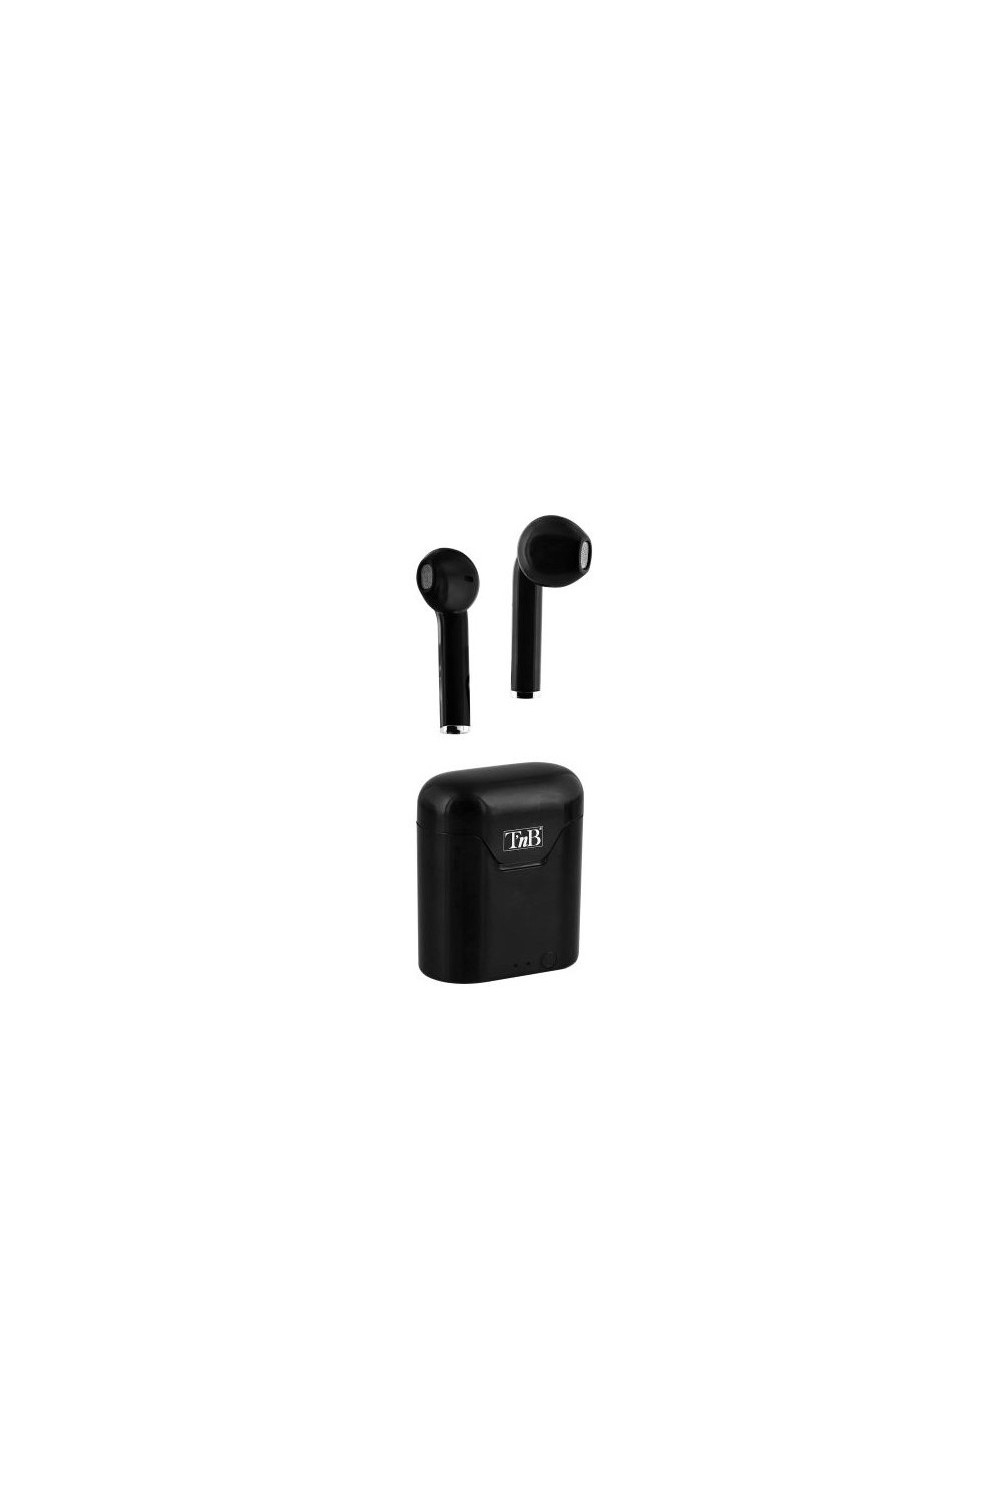 T'nB EBPLAYBKTWS Bluetooth v 5.0 στερεοφωνικά ακουστικά handsfree Black.